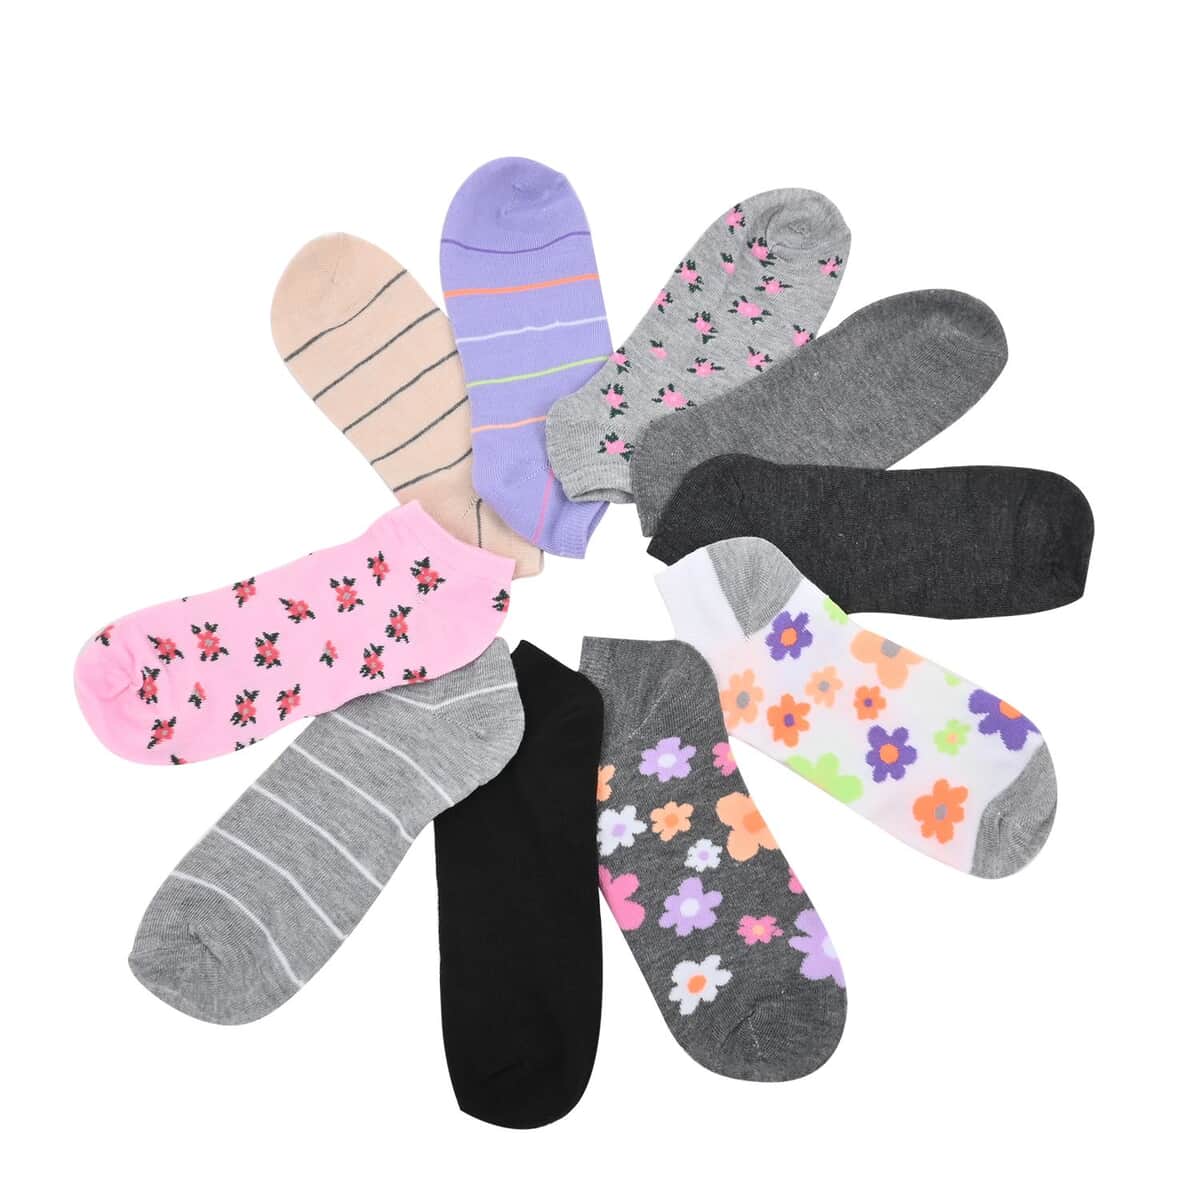 XOXO 10 Pairs Women's Low Cut Floral & Stripe Socks (Sizes 4-10) -Dark Gray/Pink image number 1